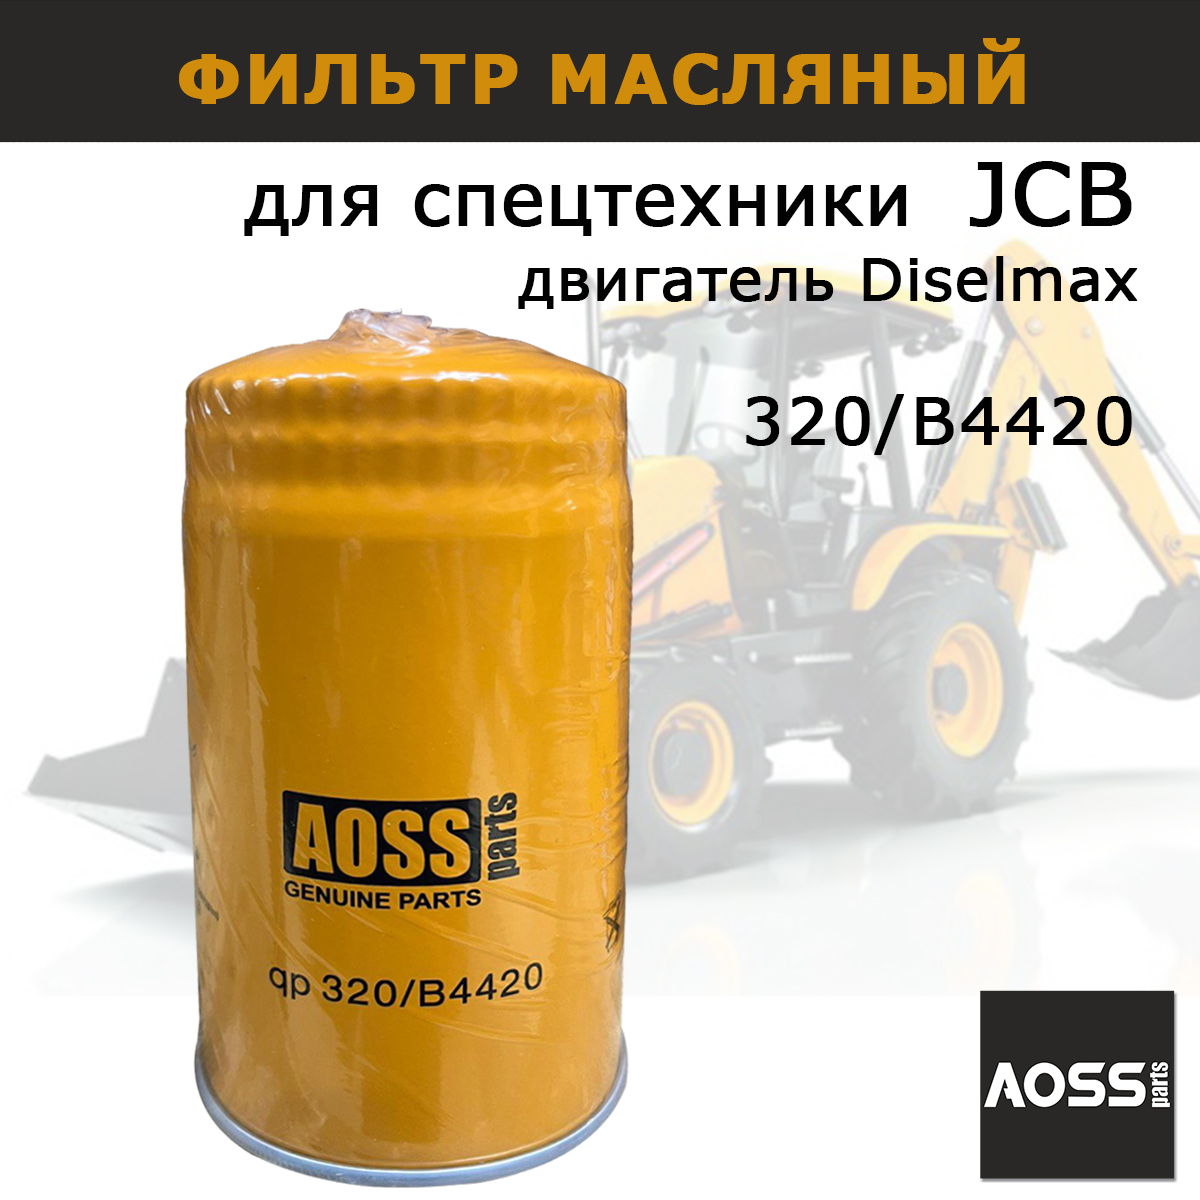 Фильтр масляный AOSS Parts 320/B4420 для спецтехники JCB двигатель Dieselmax